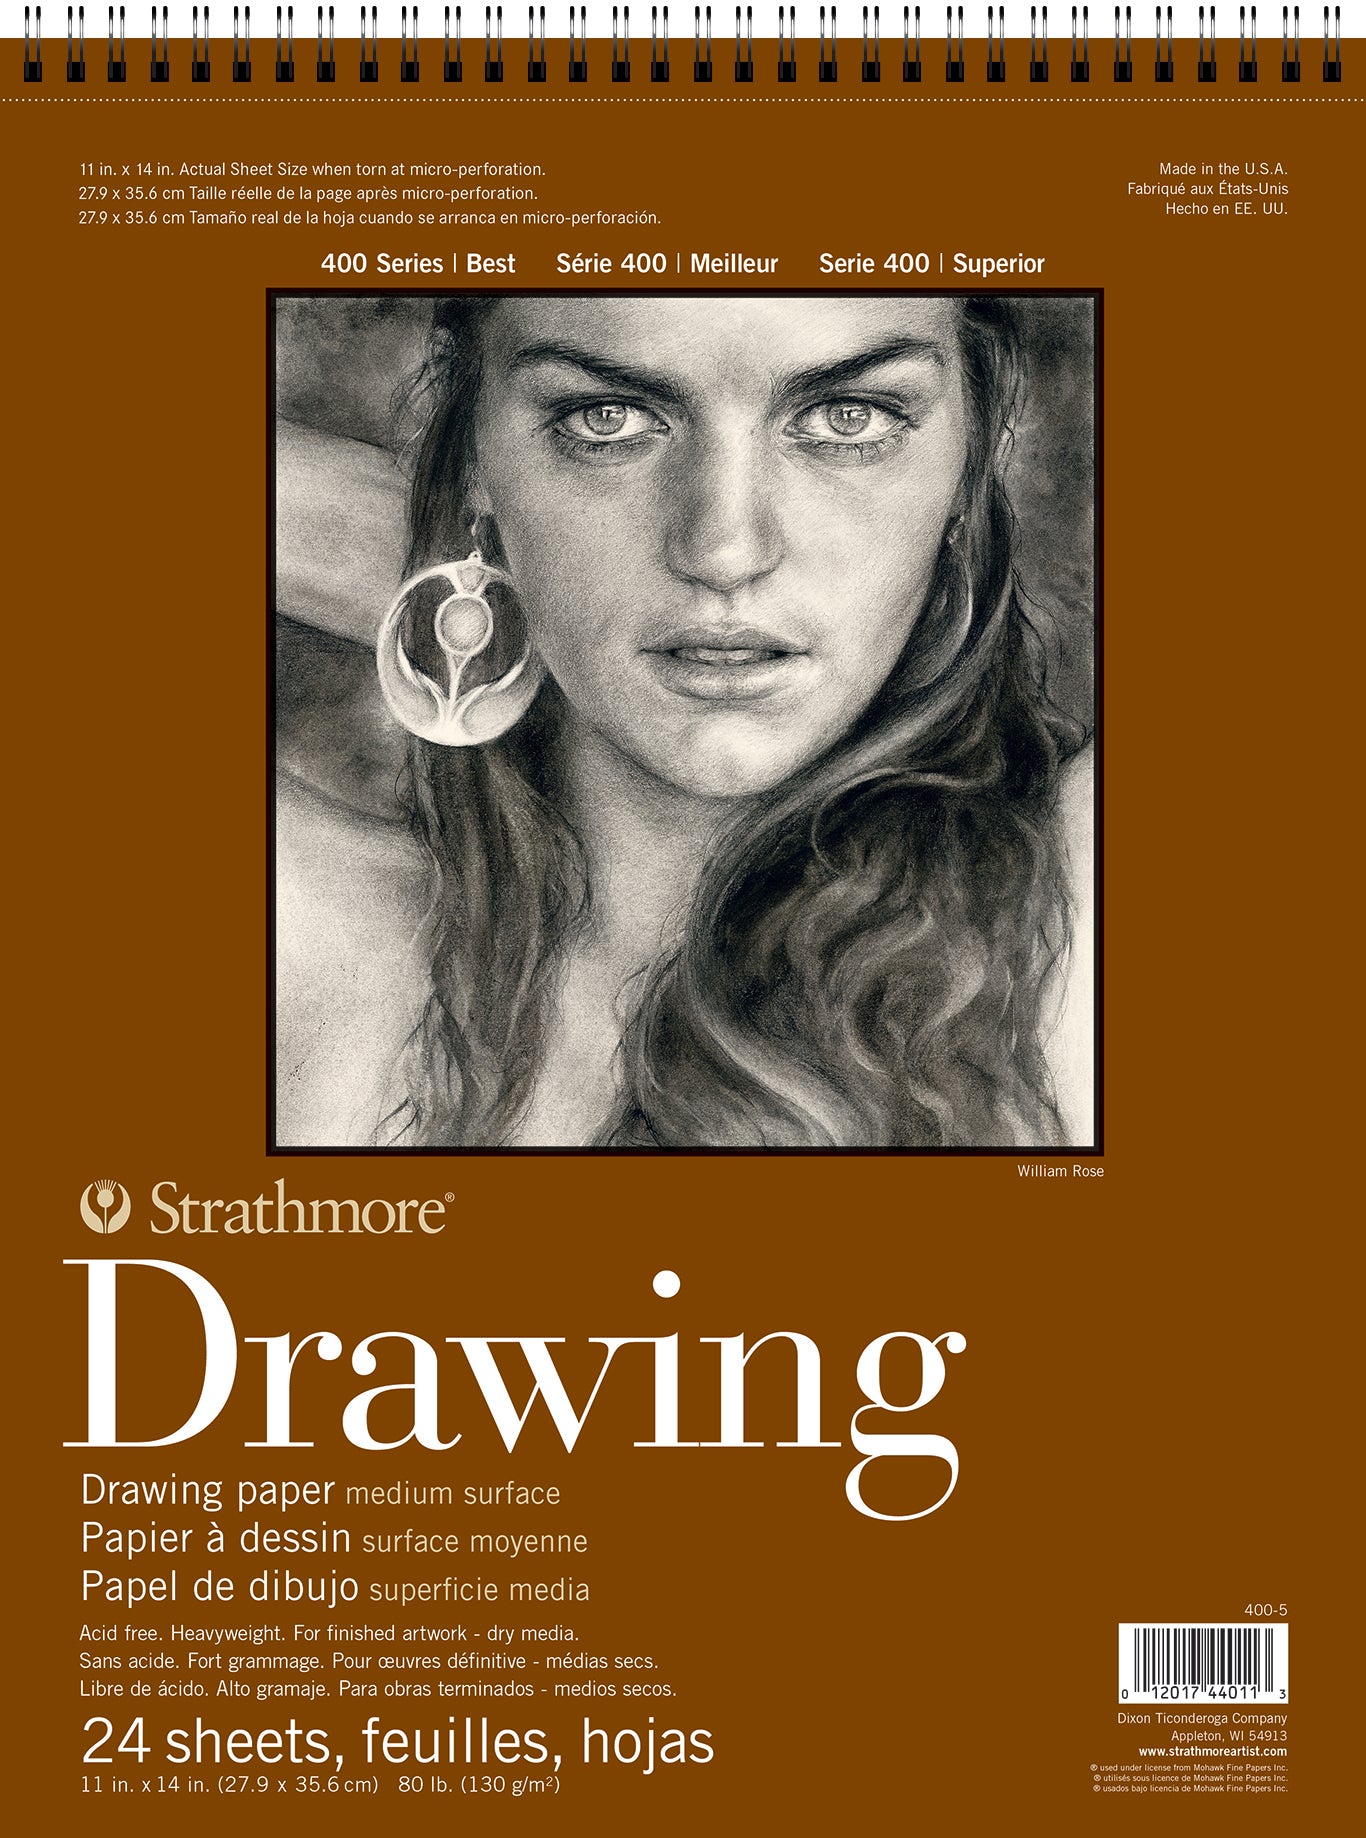 Artist Series Drawing & Sketching Pads @ Raw Materials Art Supplies